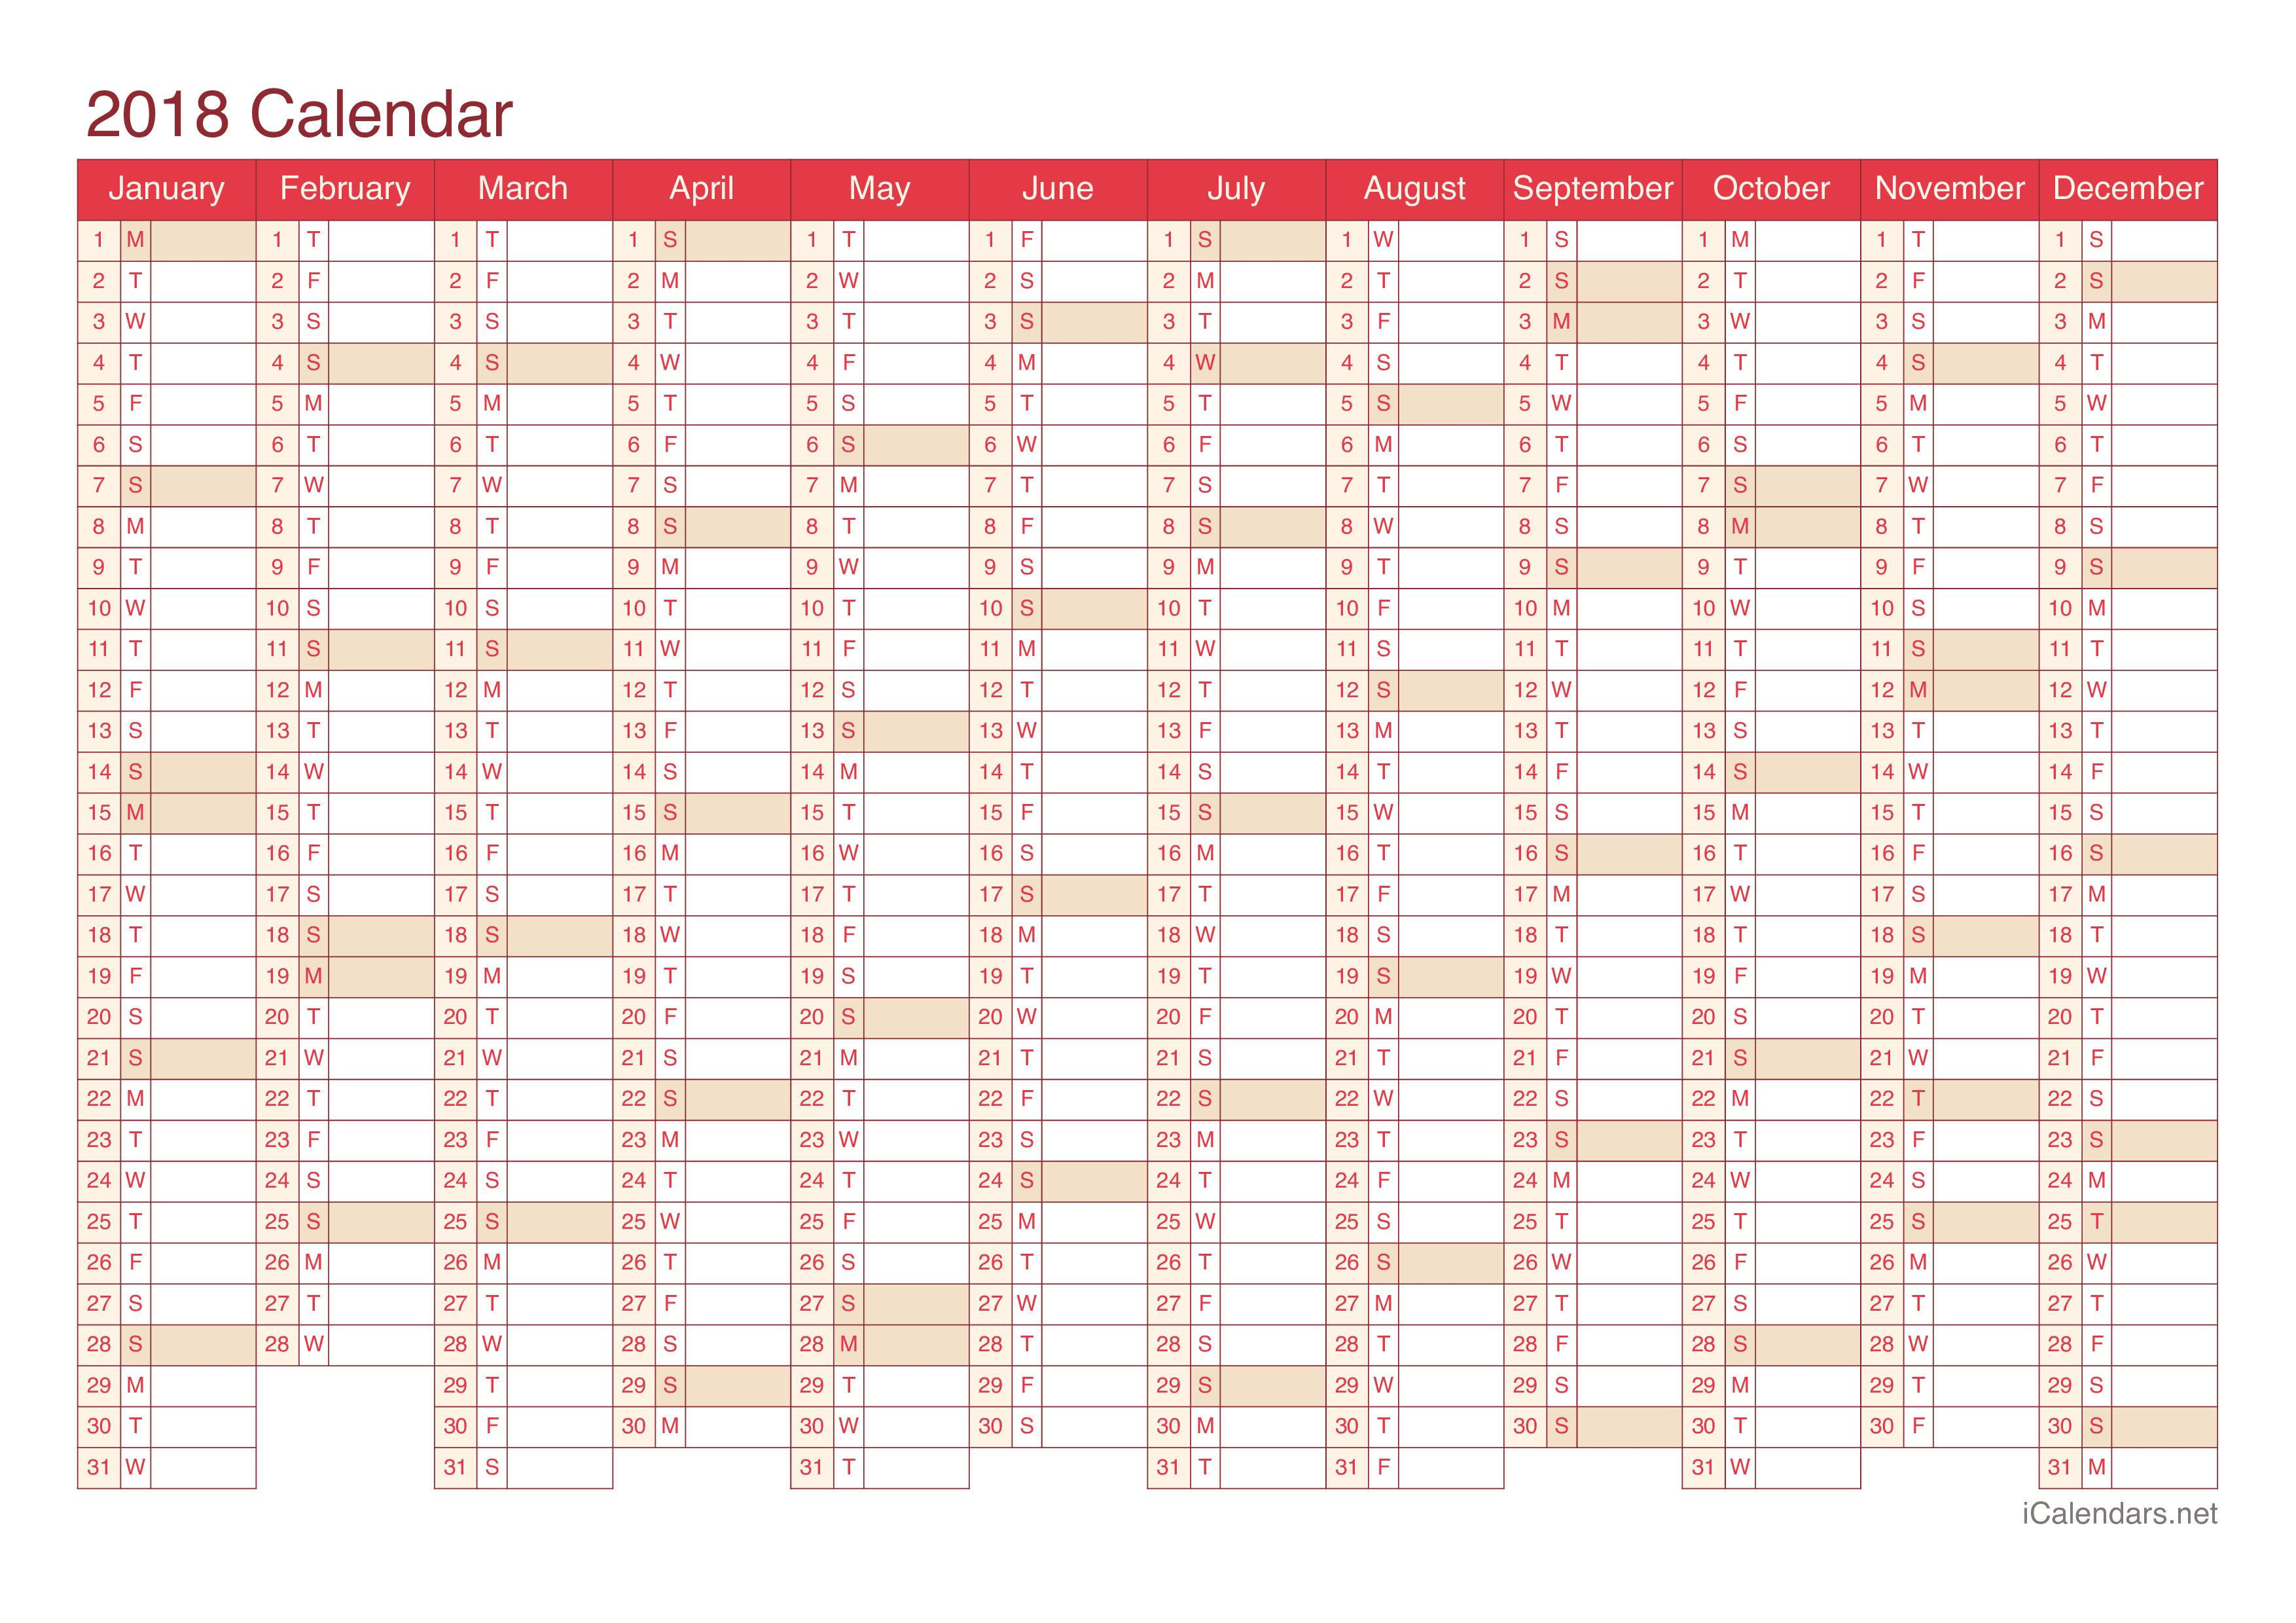 2018 Calendar - Cherry